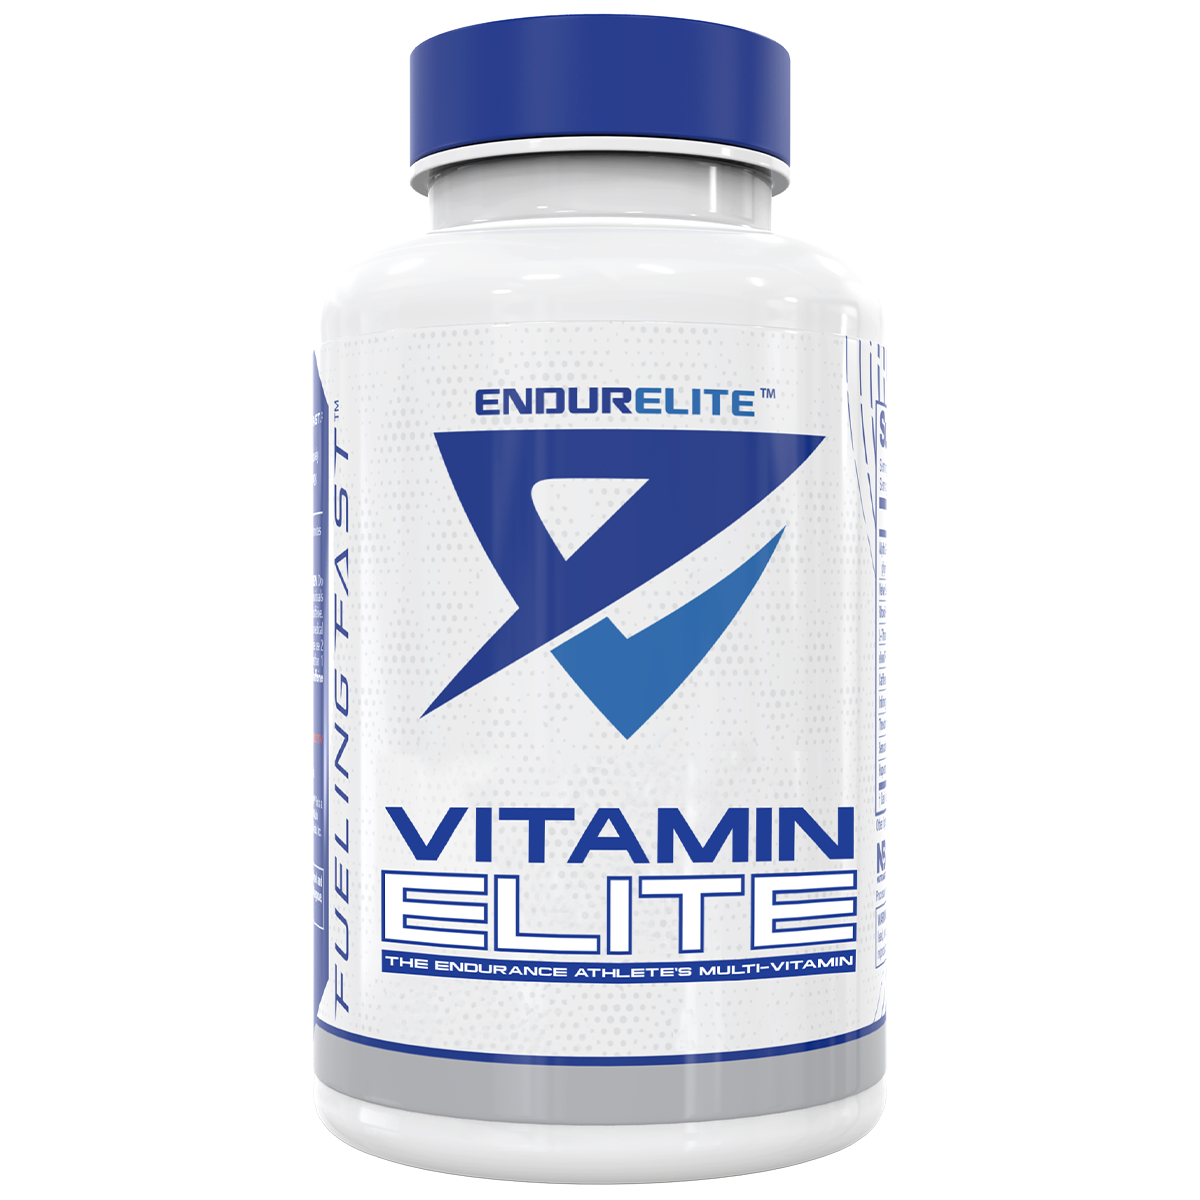 EndurElite's Vitamin Elite - The Endurance Athlete's Multivitamin